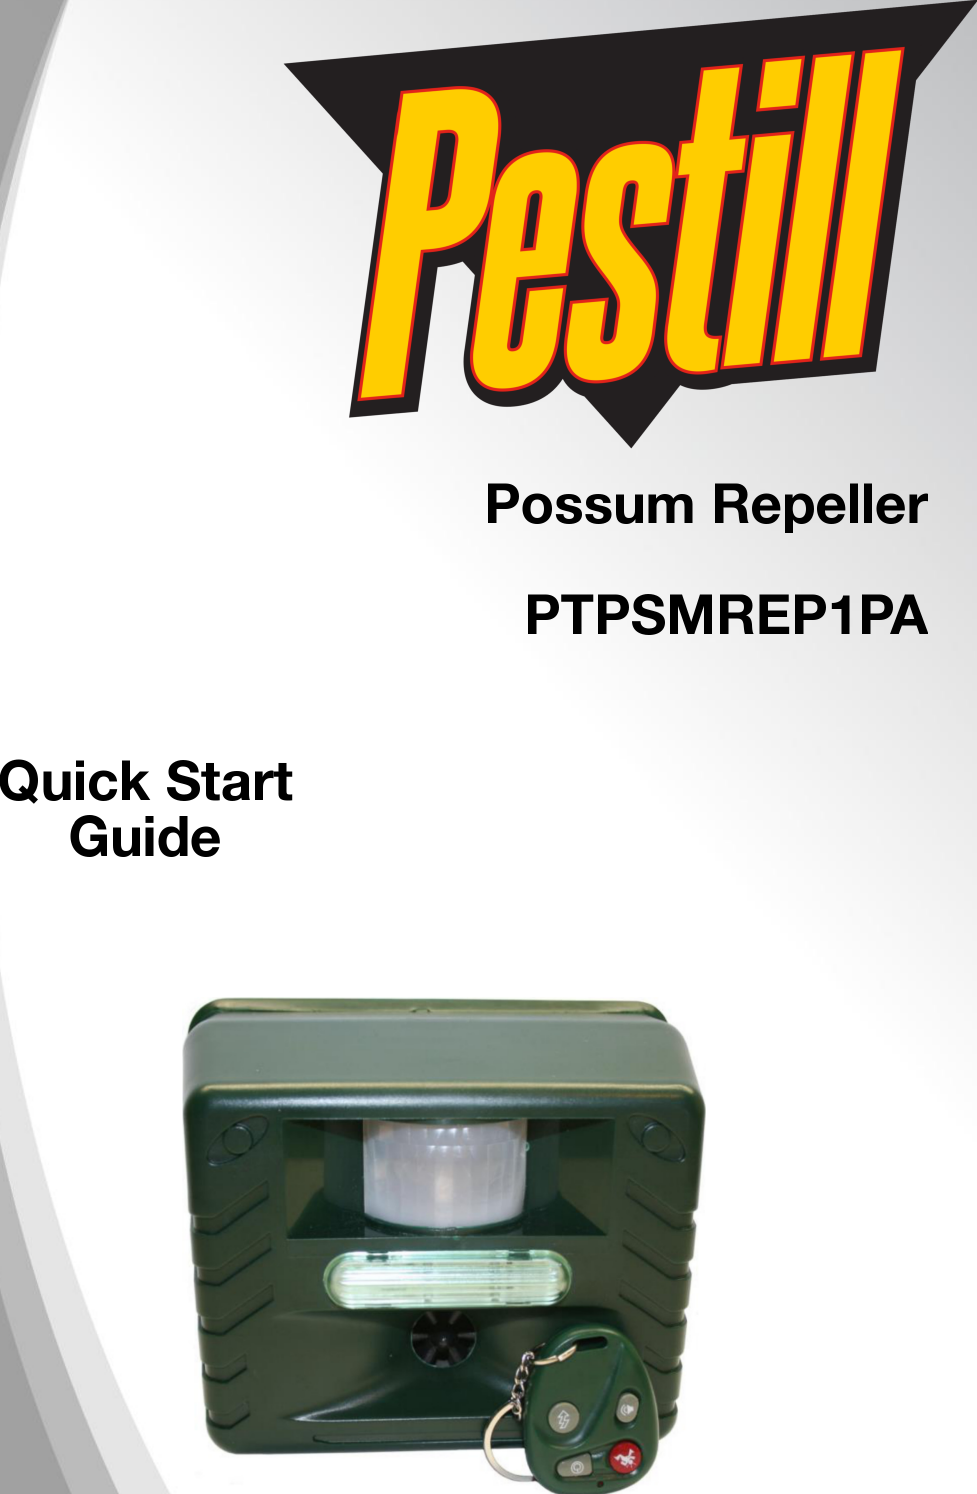 Page 1 of 7 - PTPSMREP1PA Pestill Possum Repeller User Manual  PTPSMREP1PA2-QSG